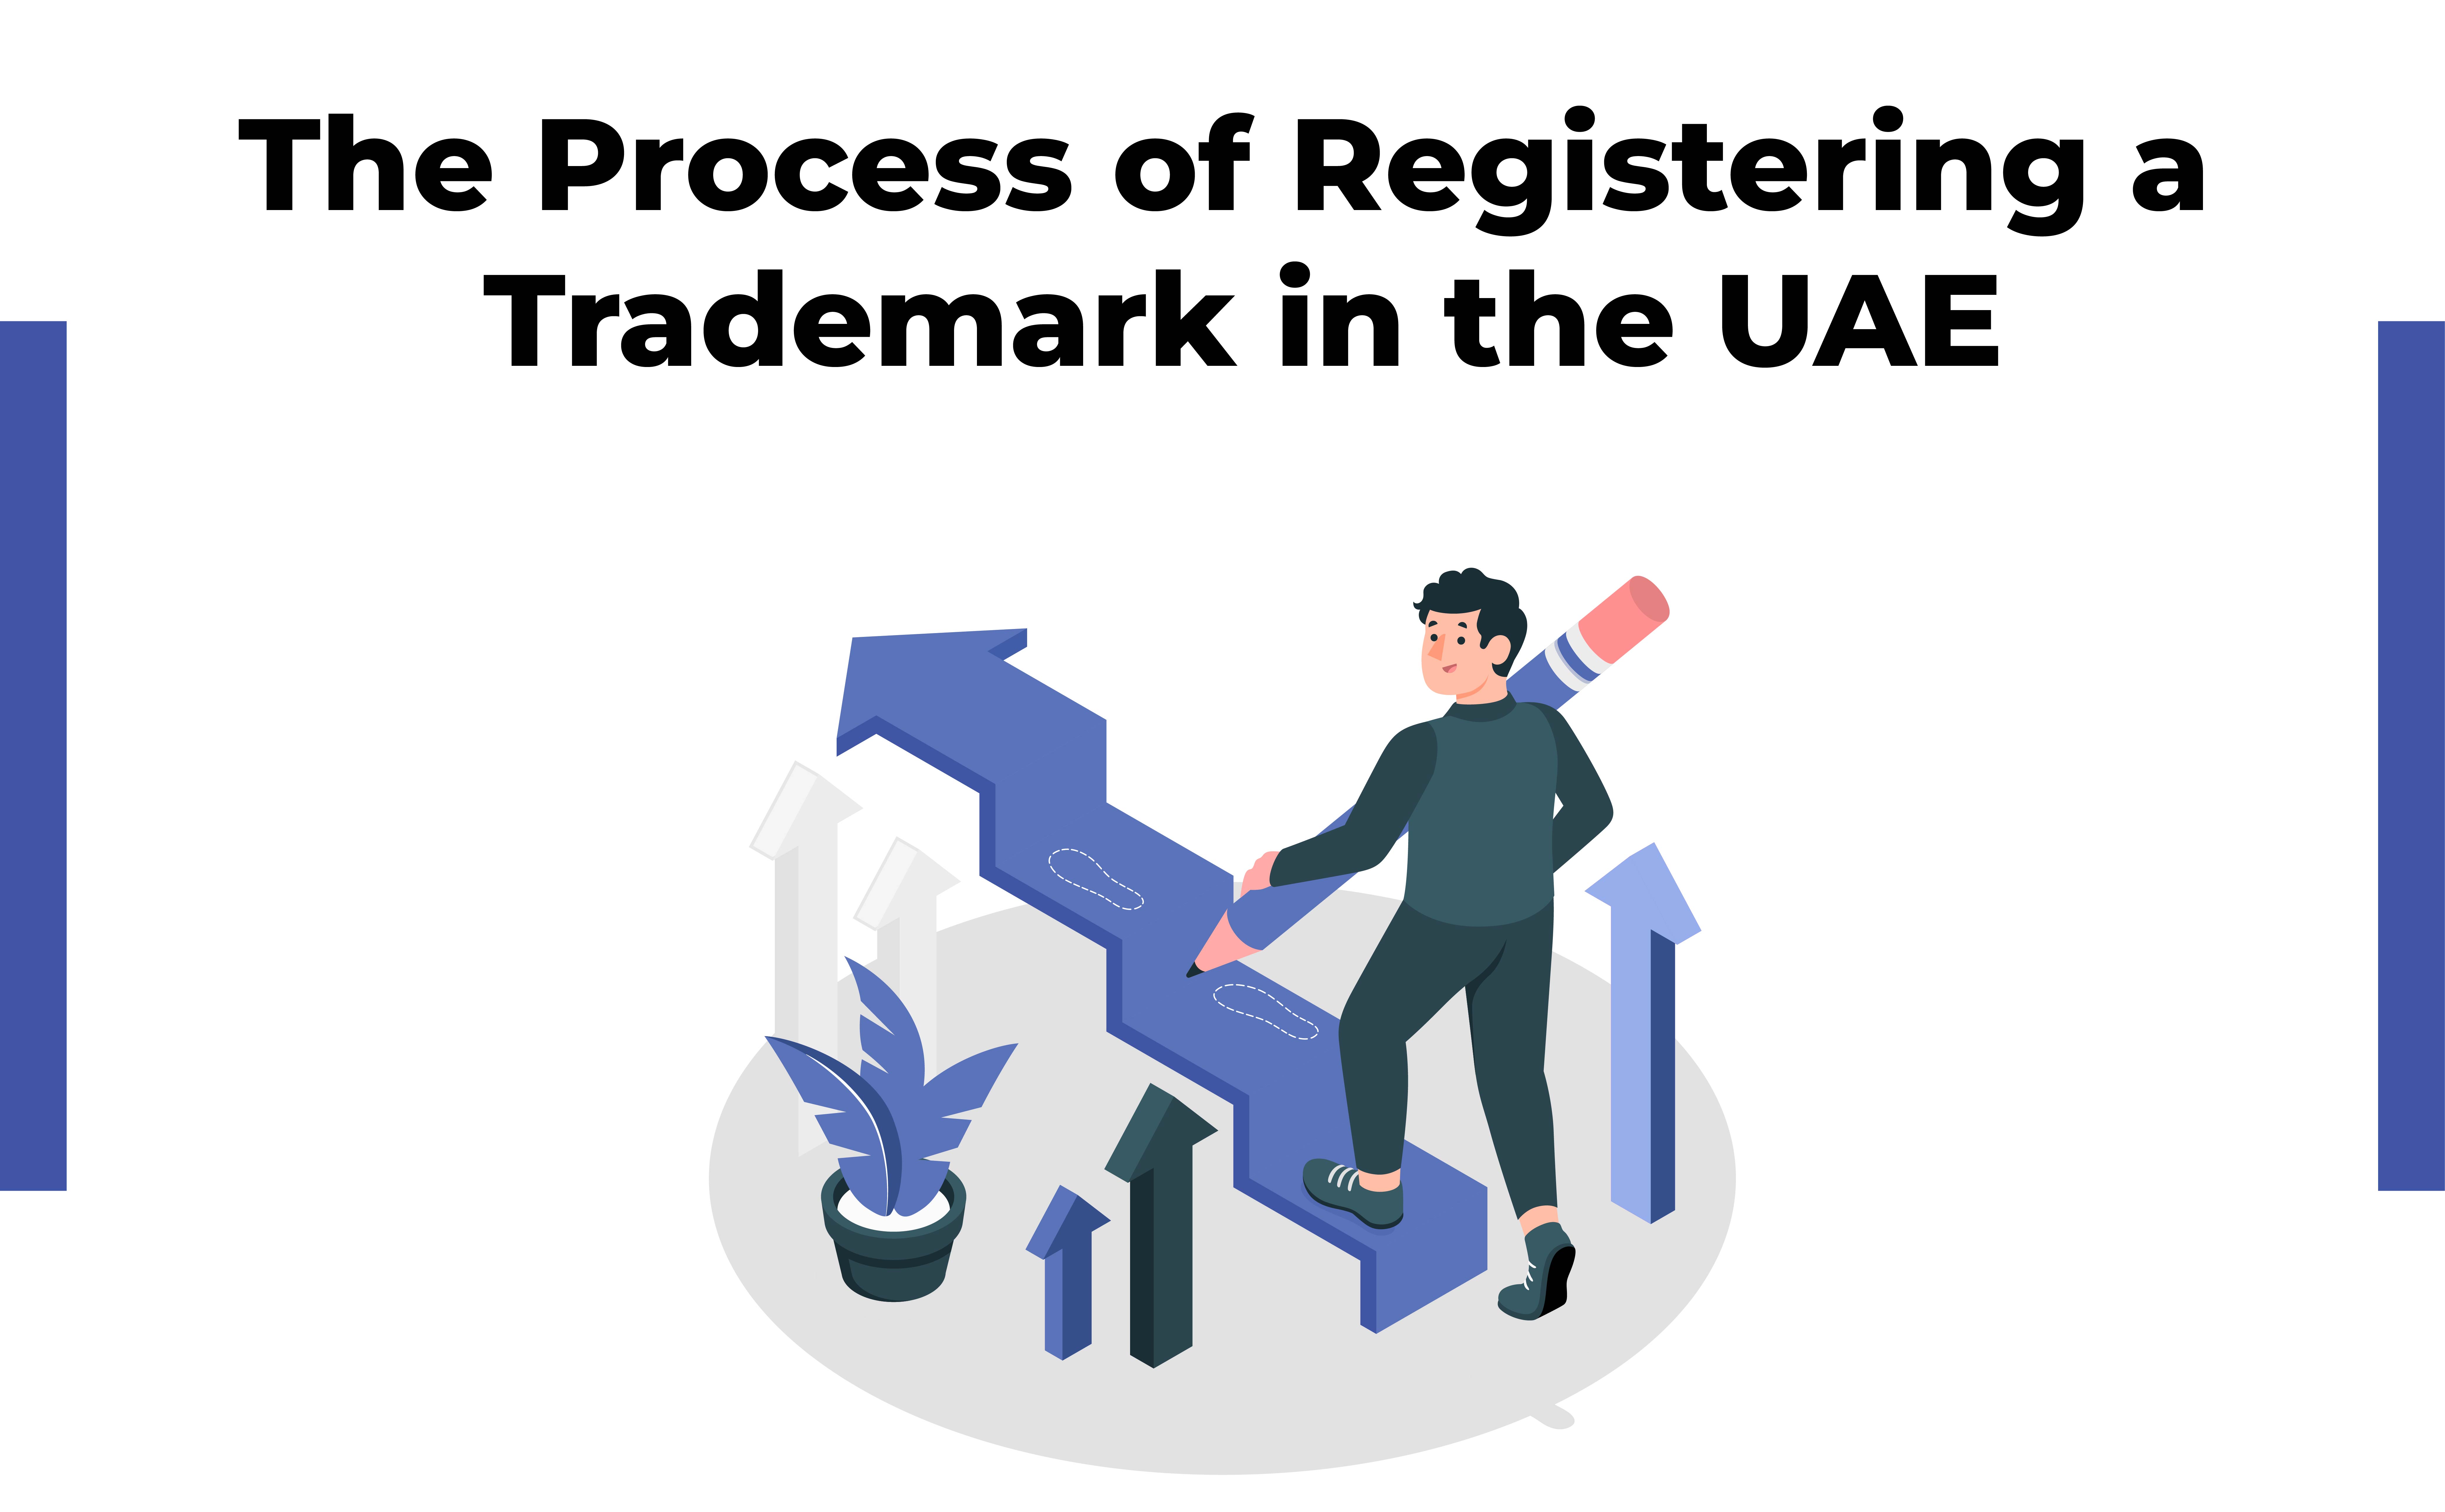 The Procedure of Trademark Registration in UAE